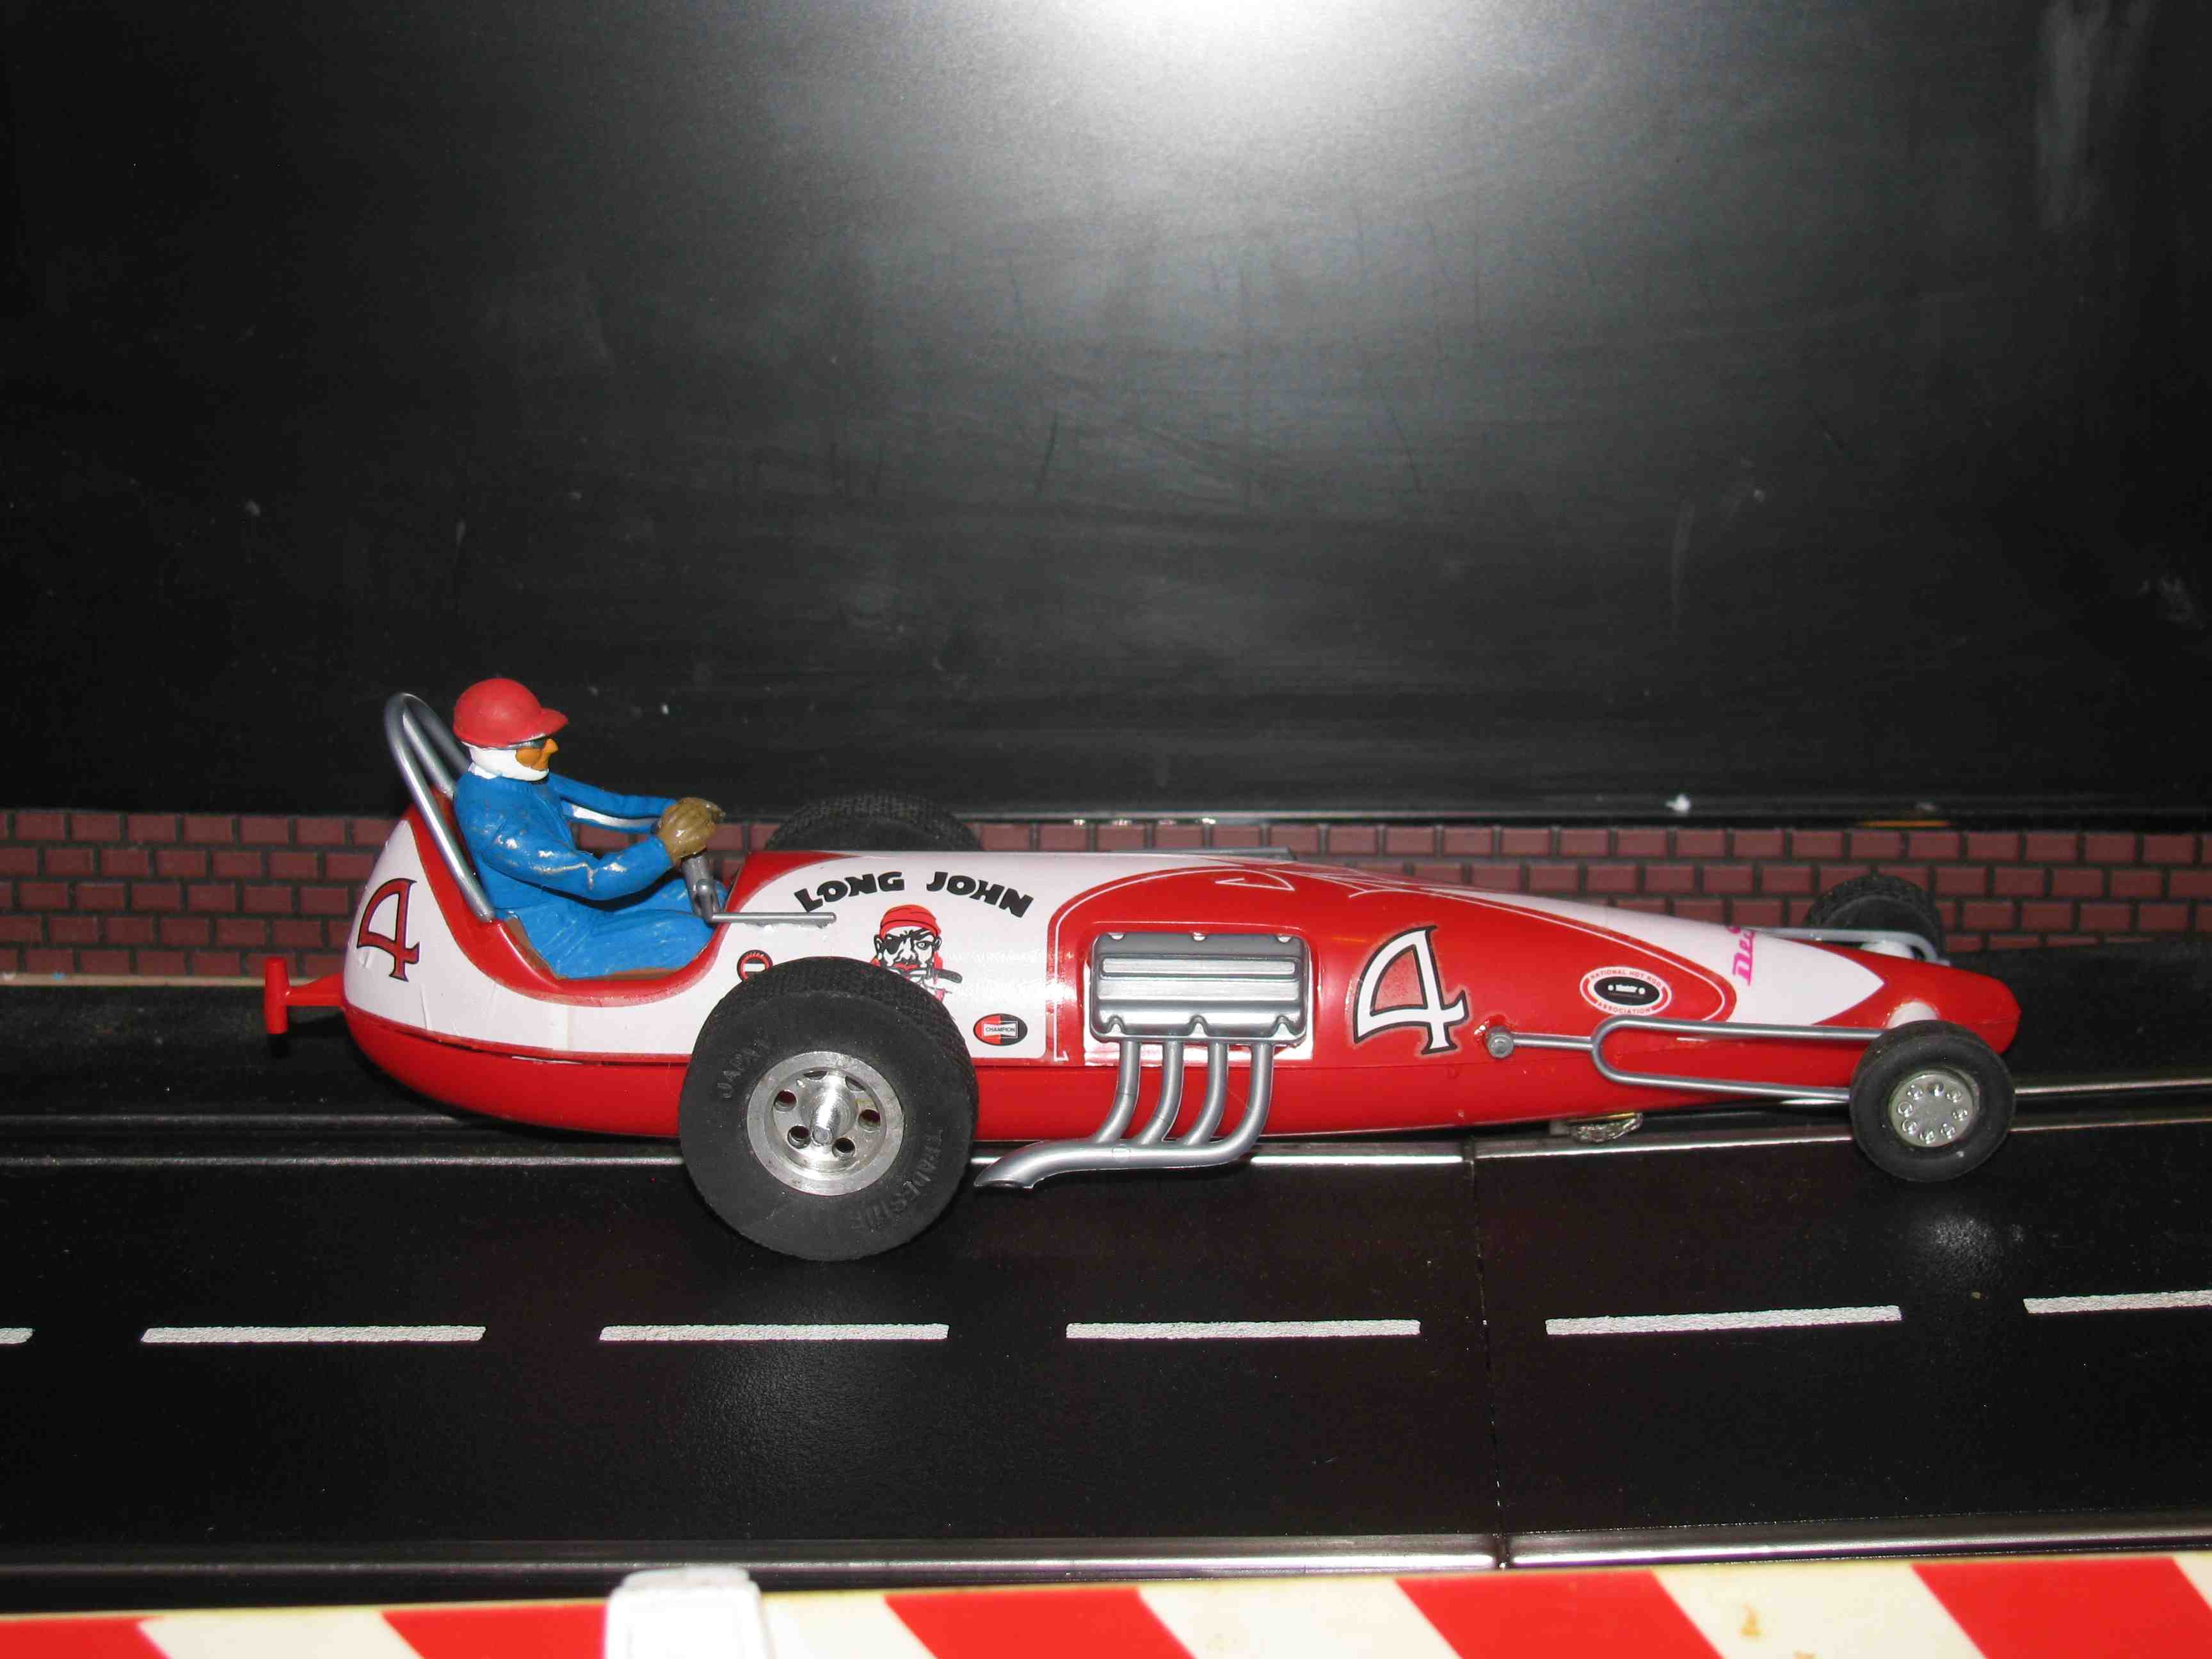 * SOLD * Vintage Monogram Revell Long John Dragster Slot Car 1/32 Scale – Red – Car #4 VI